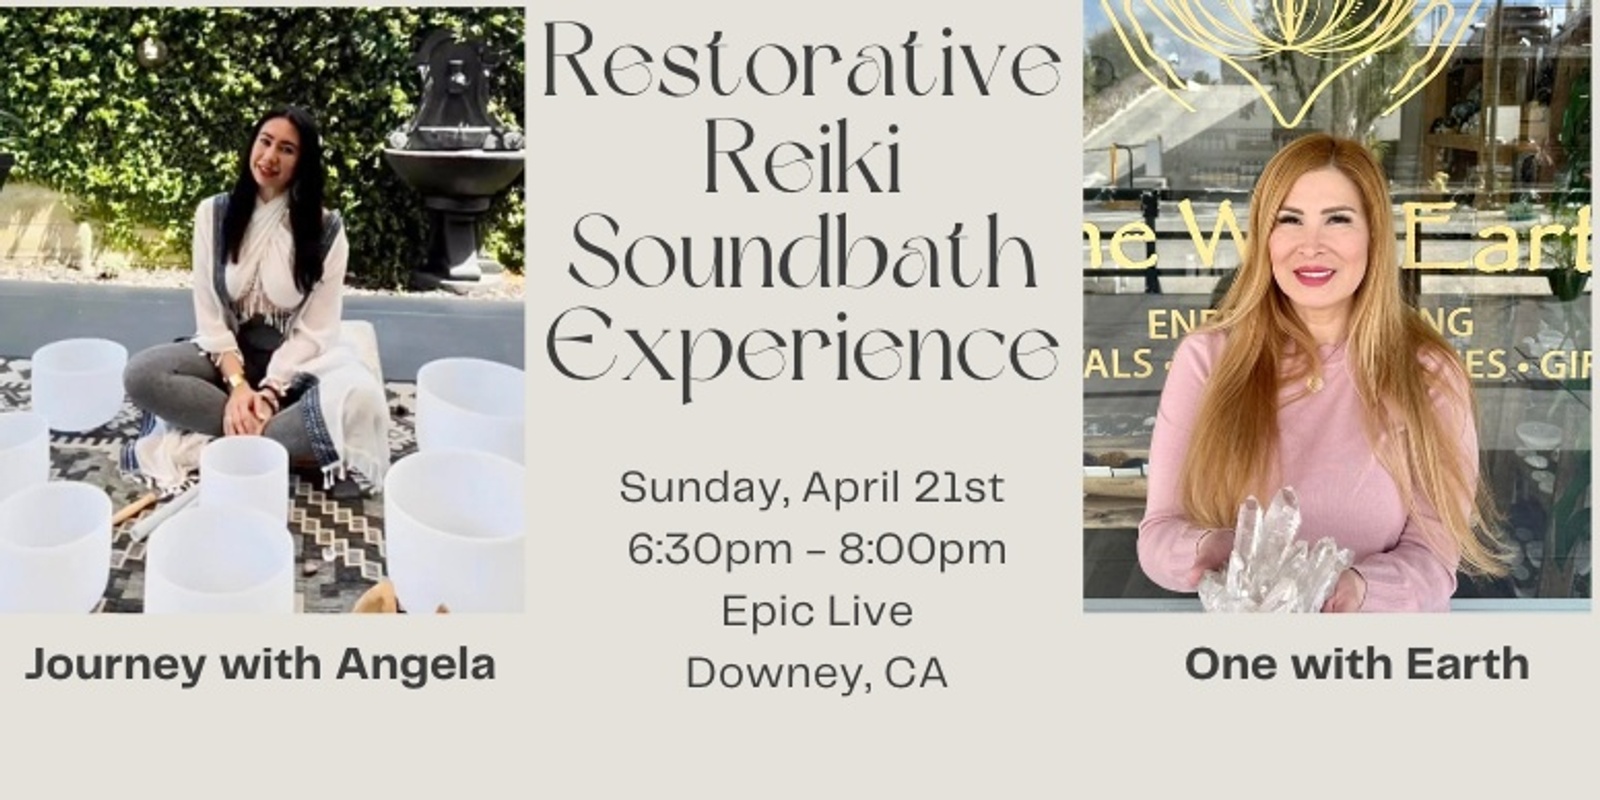 Banner image for Restorative Reiki Soundbath Experience